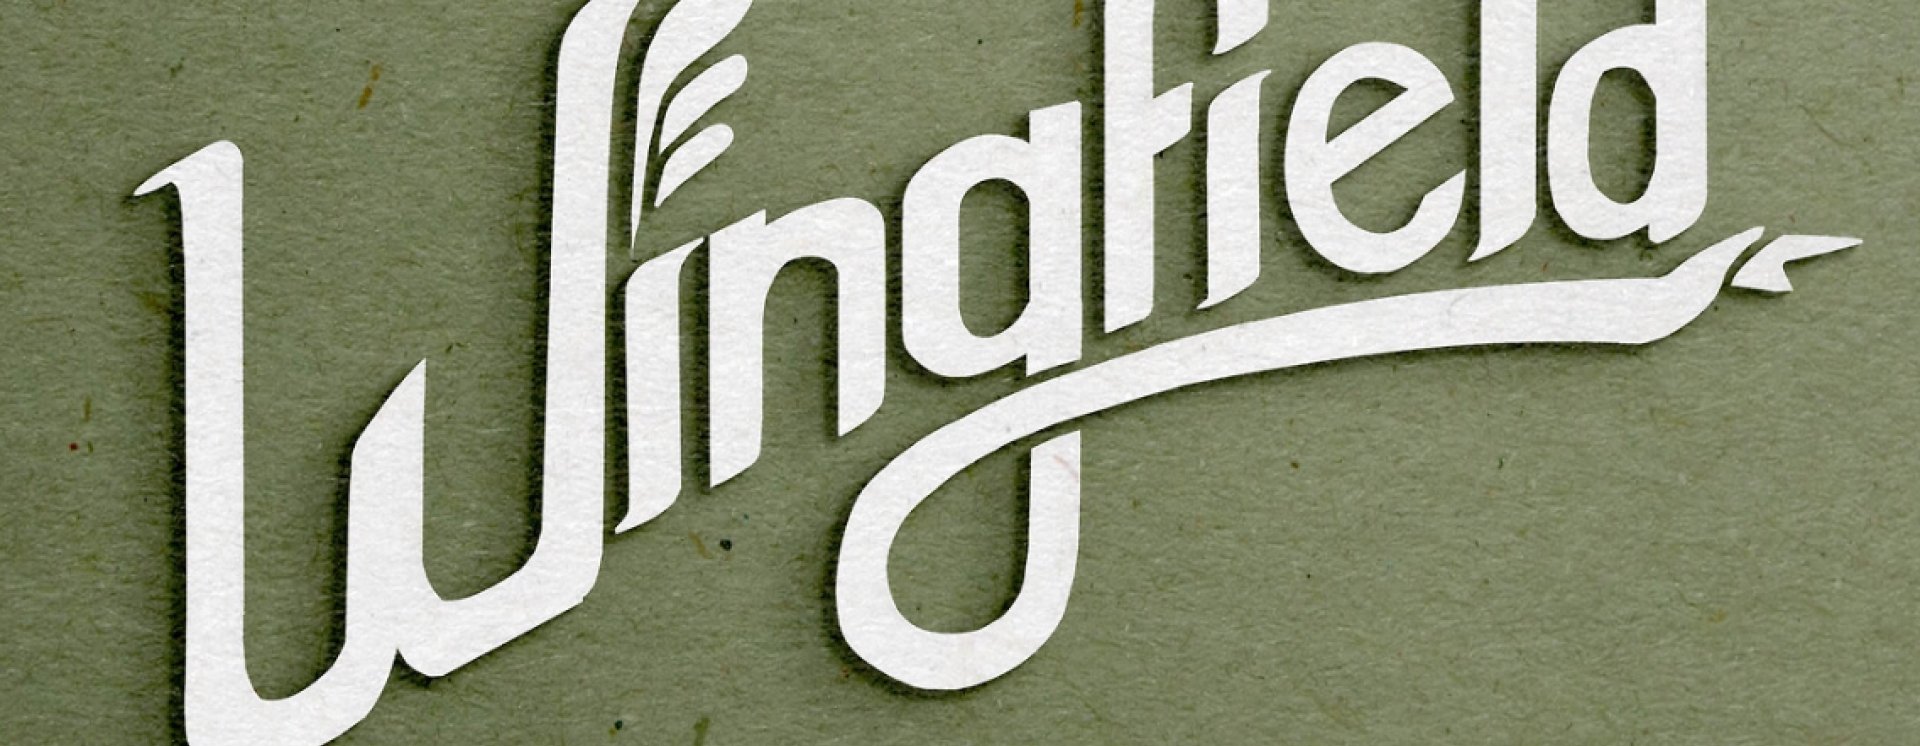 Wingfield logo copy